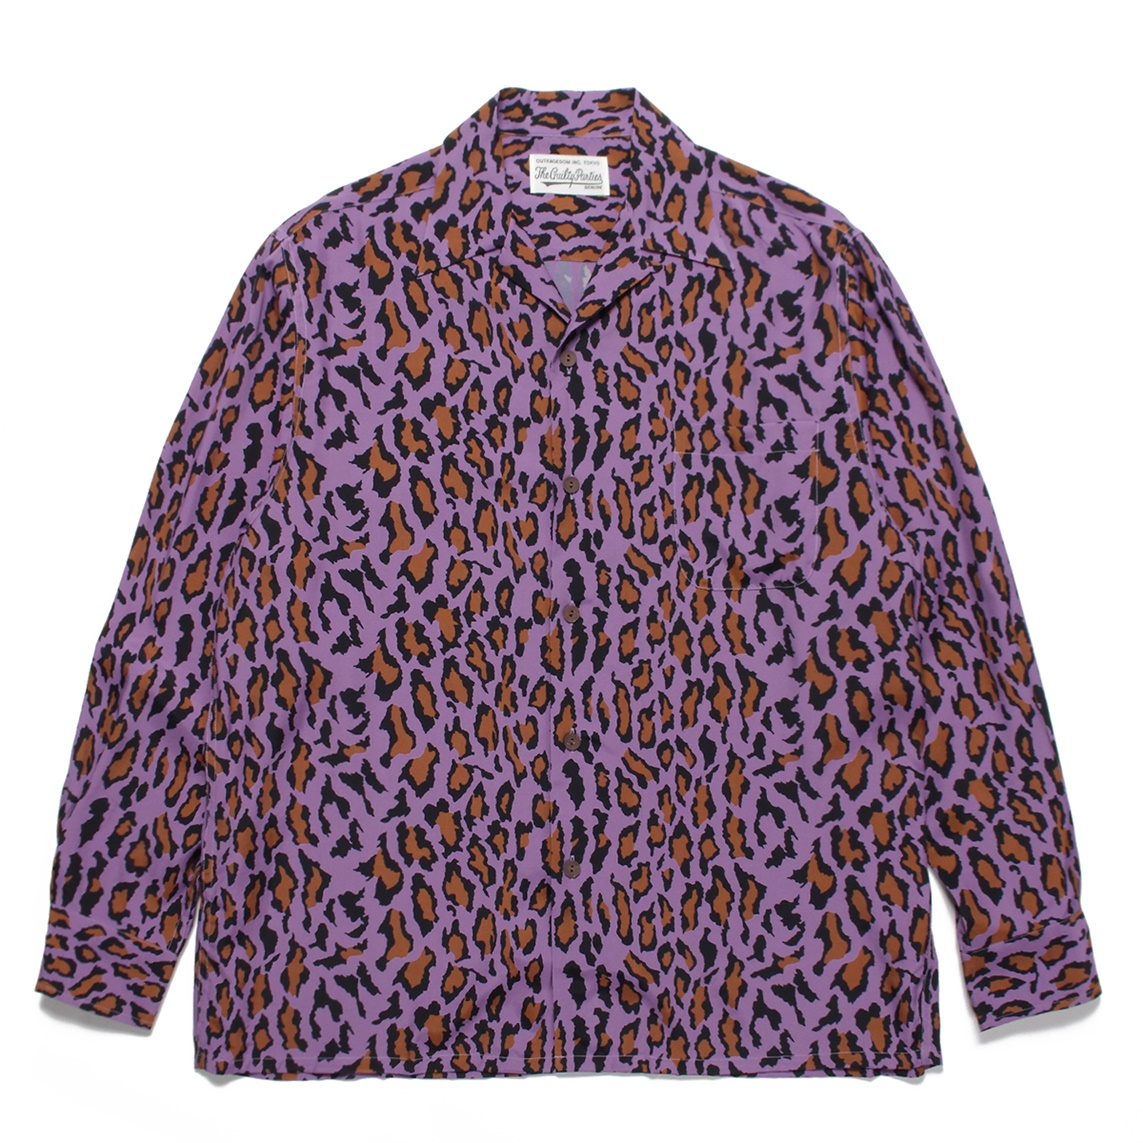 wackomaria leopard shirt